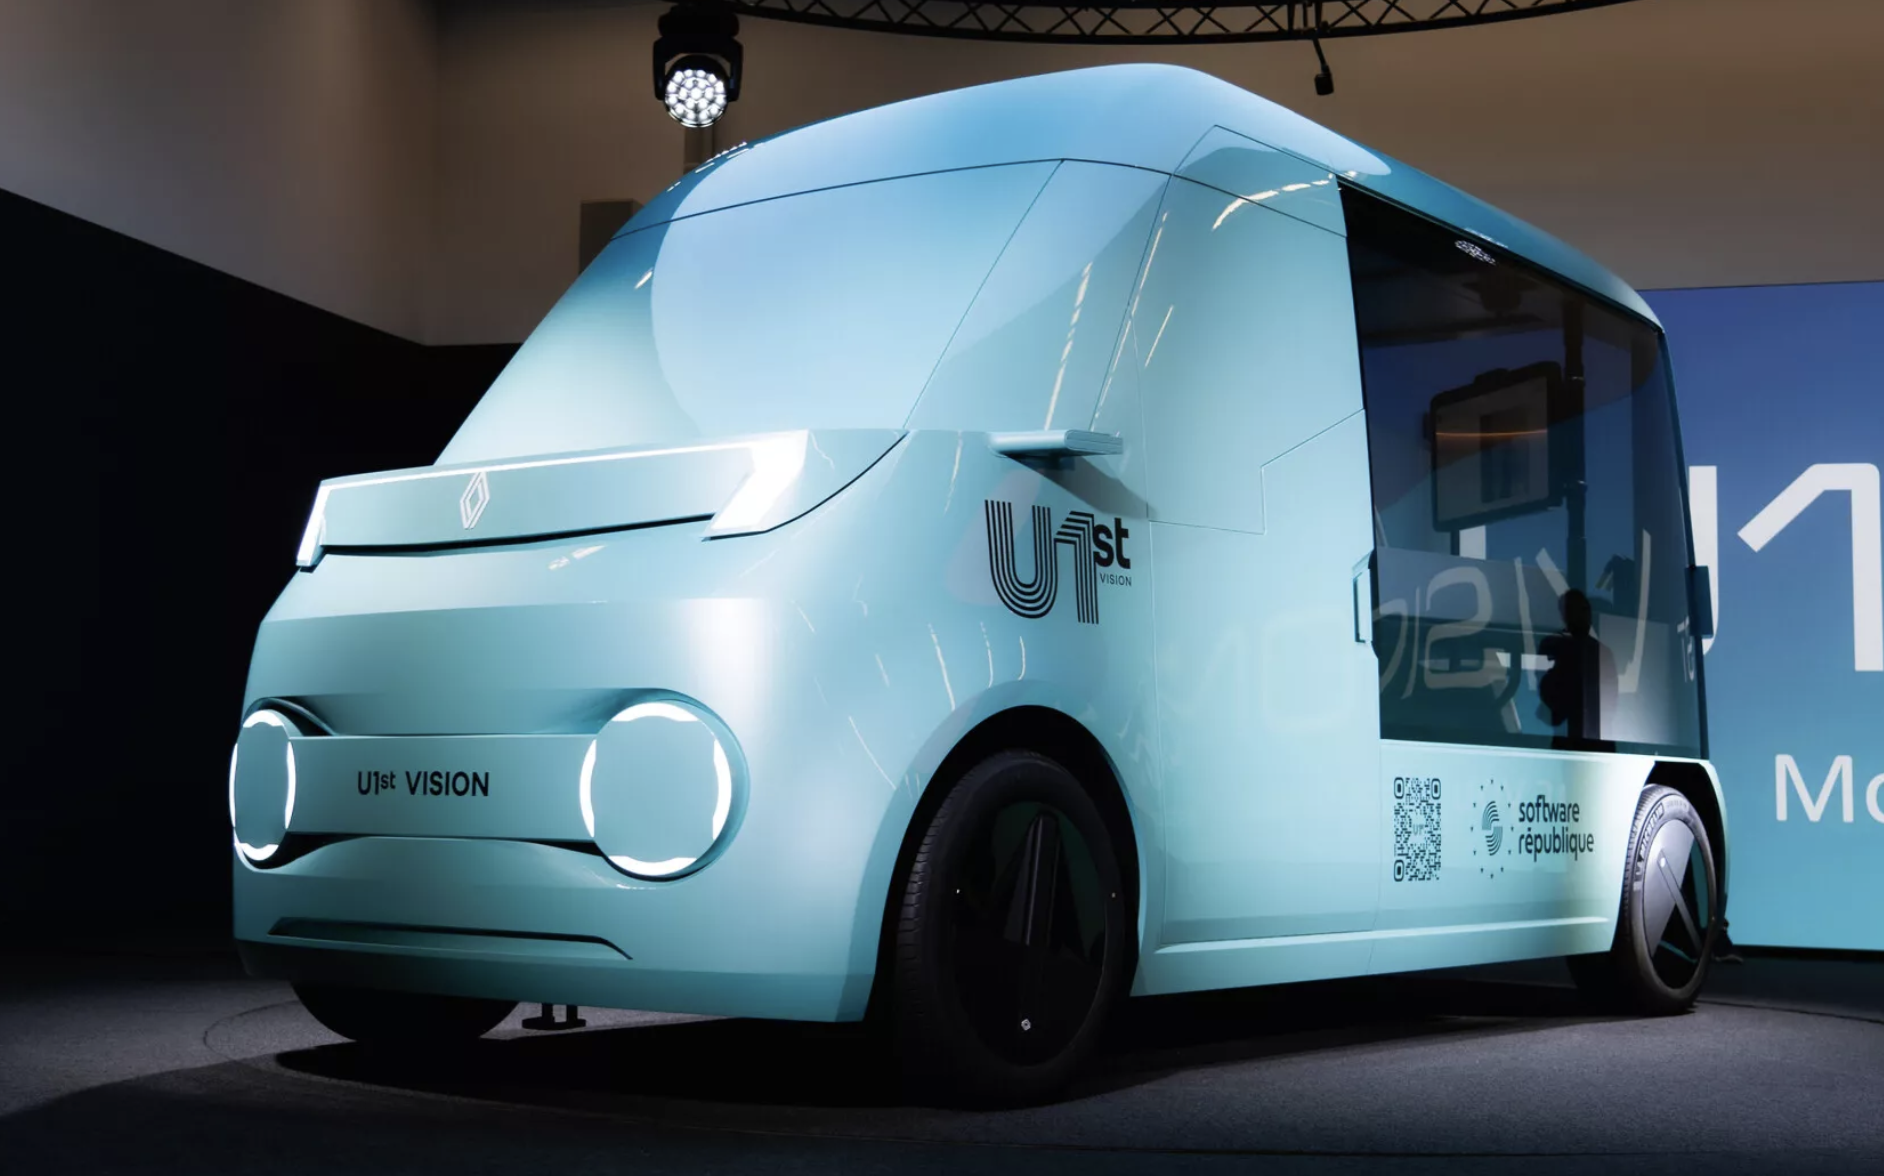 Renault presents U1st Vision, a hi-tech hospital on four wheels